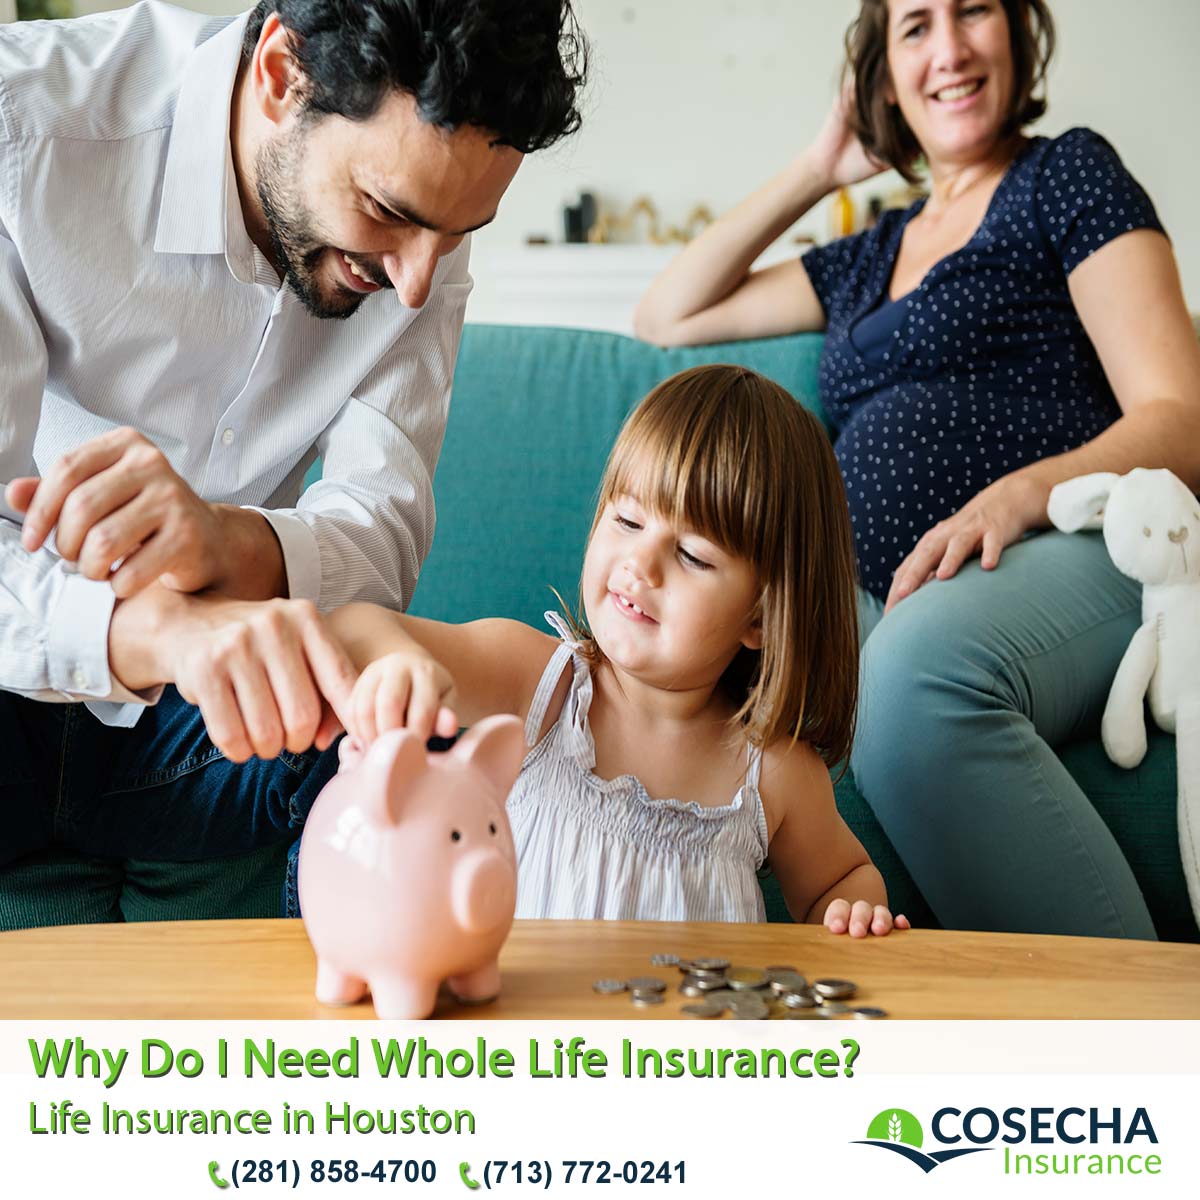 05 Life Insurance in Houston